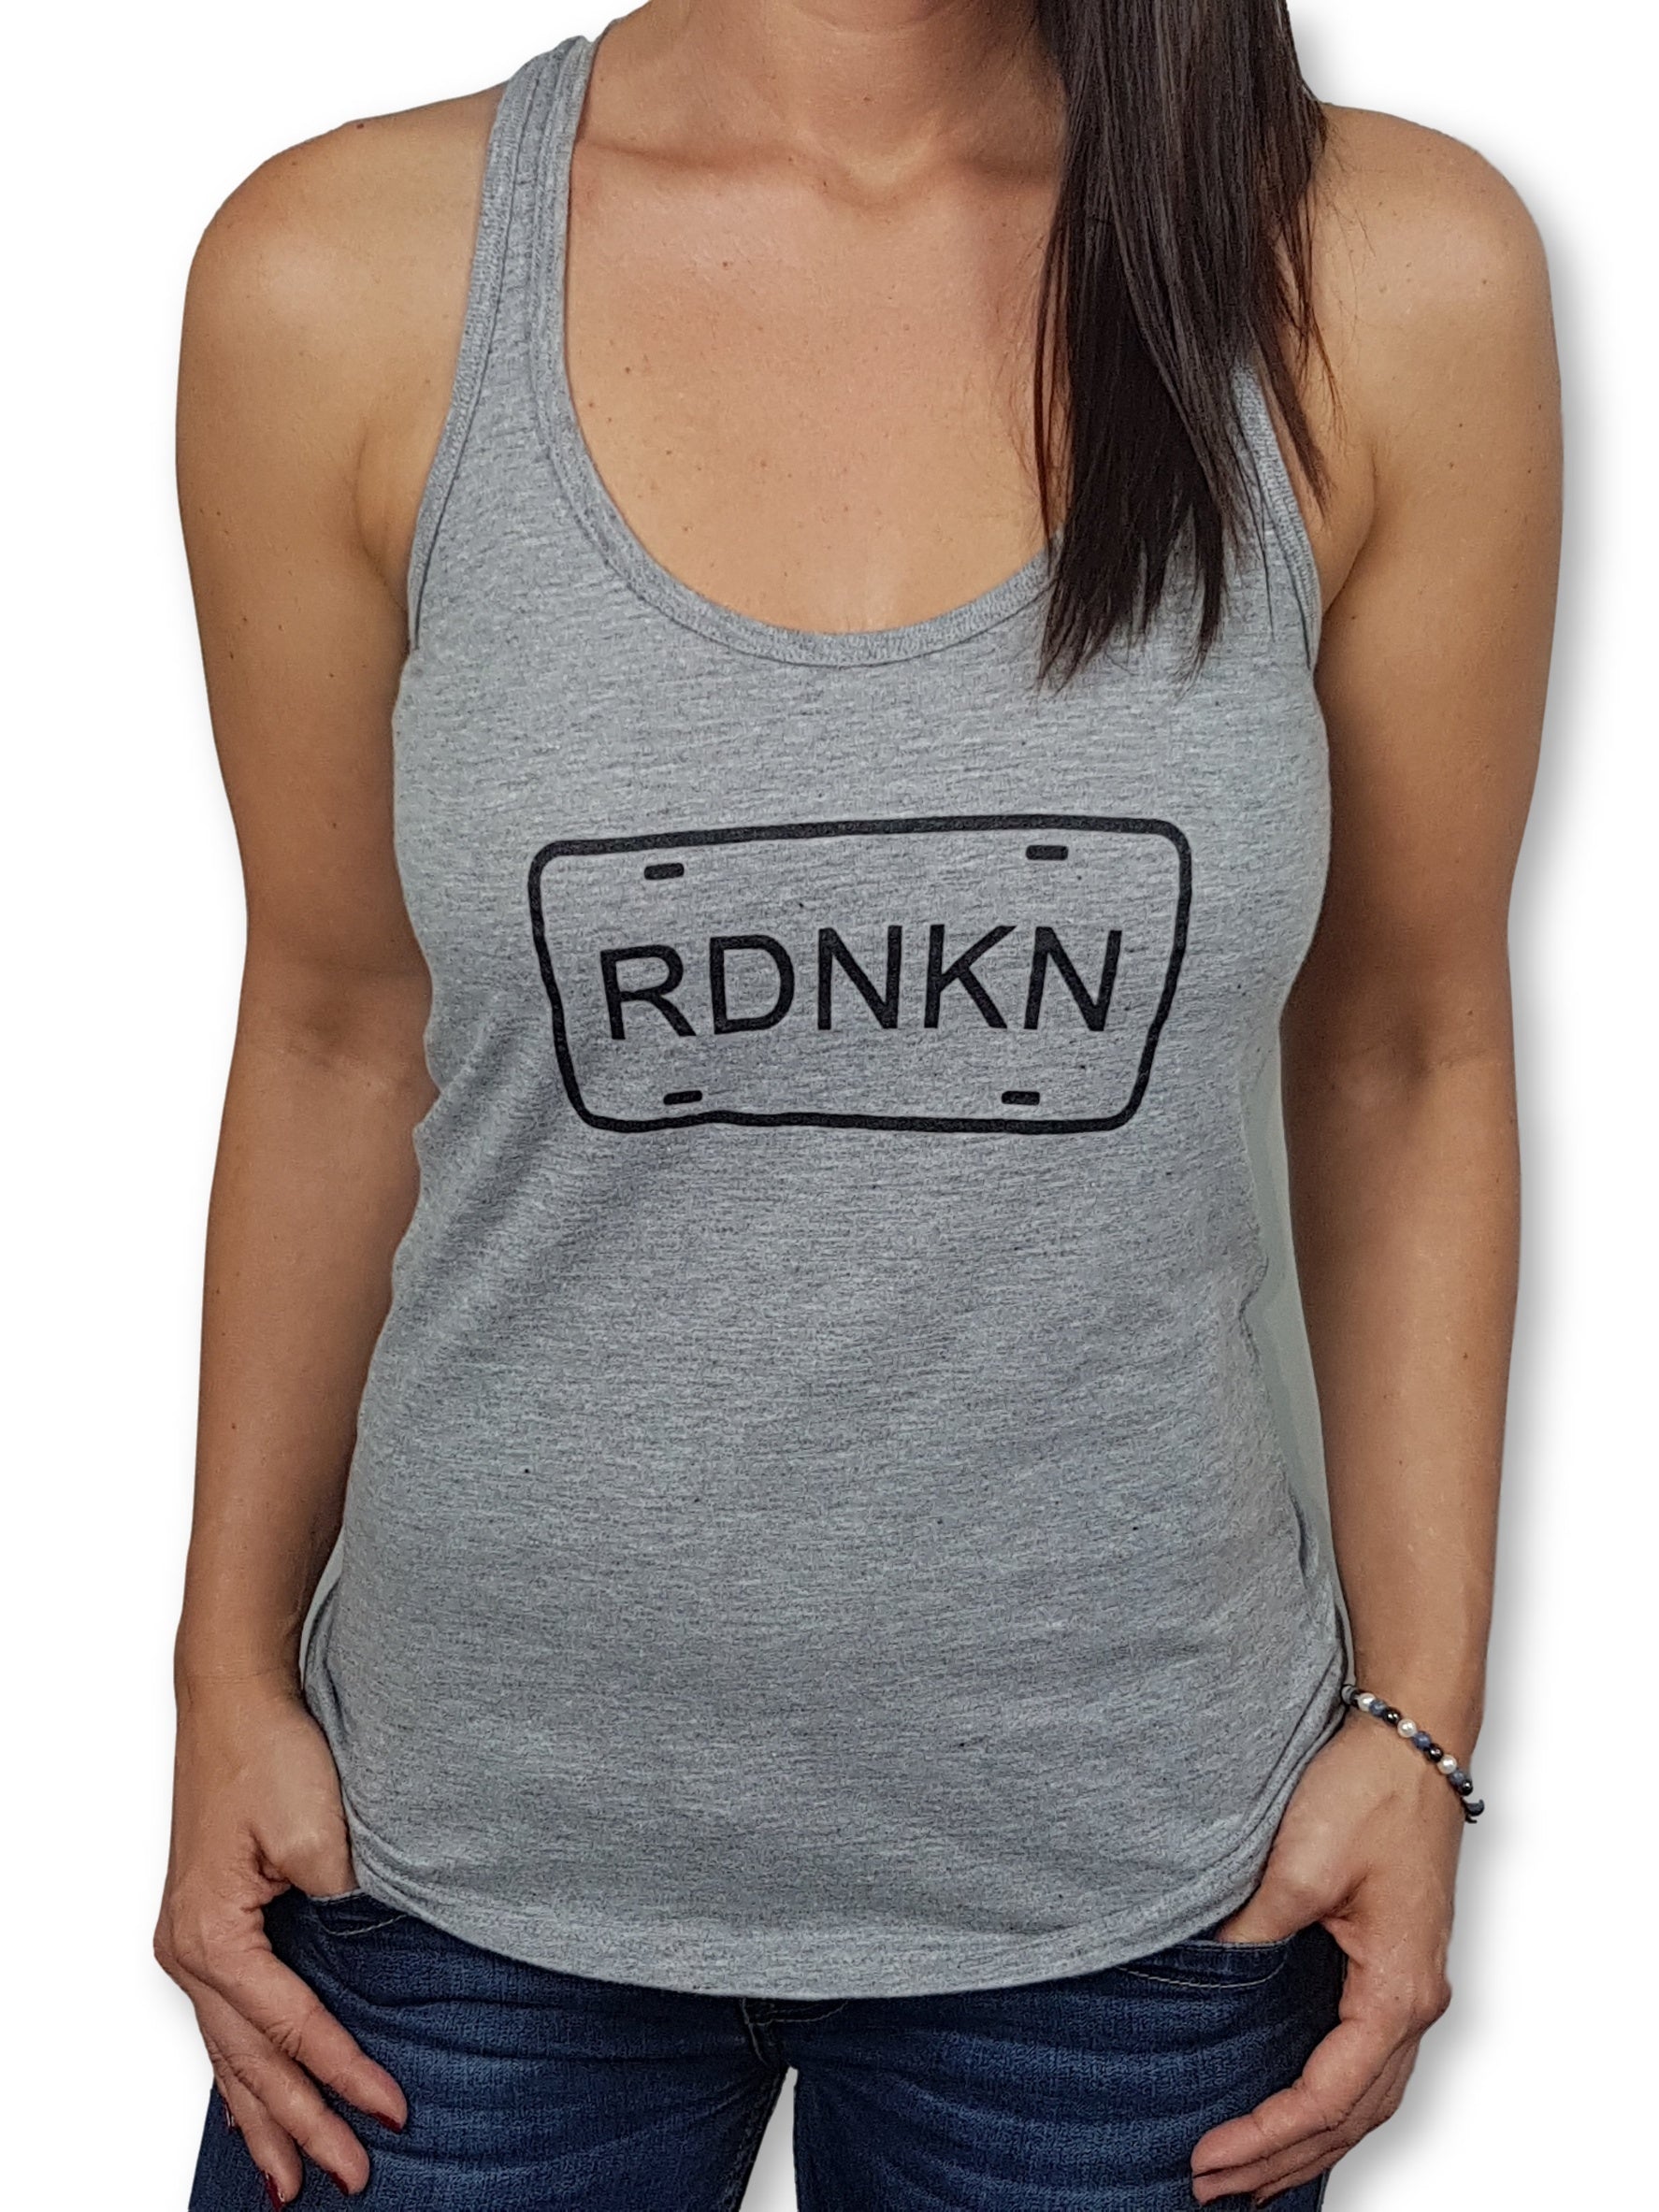 Womens RDNKN Racerback Tank - rdnkn.ca